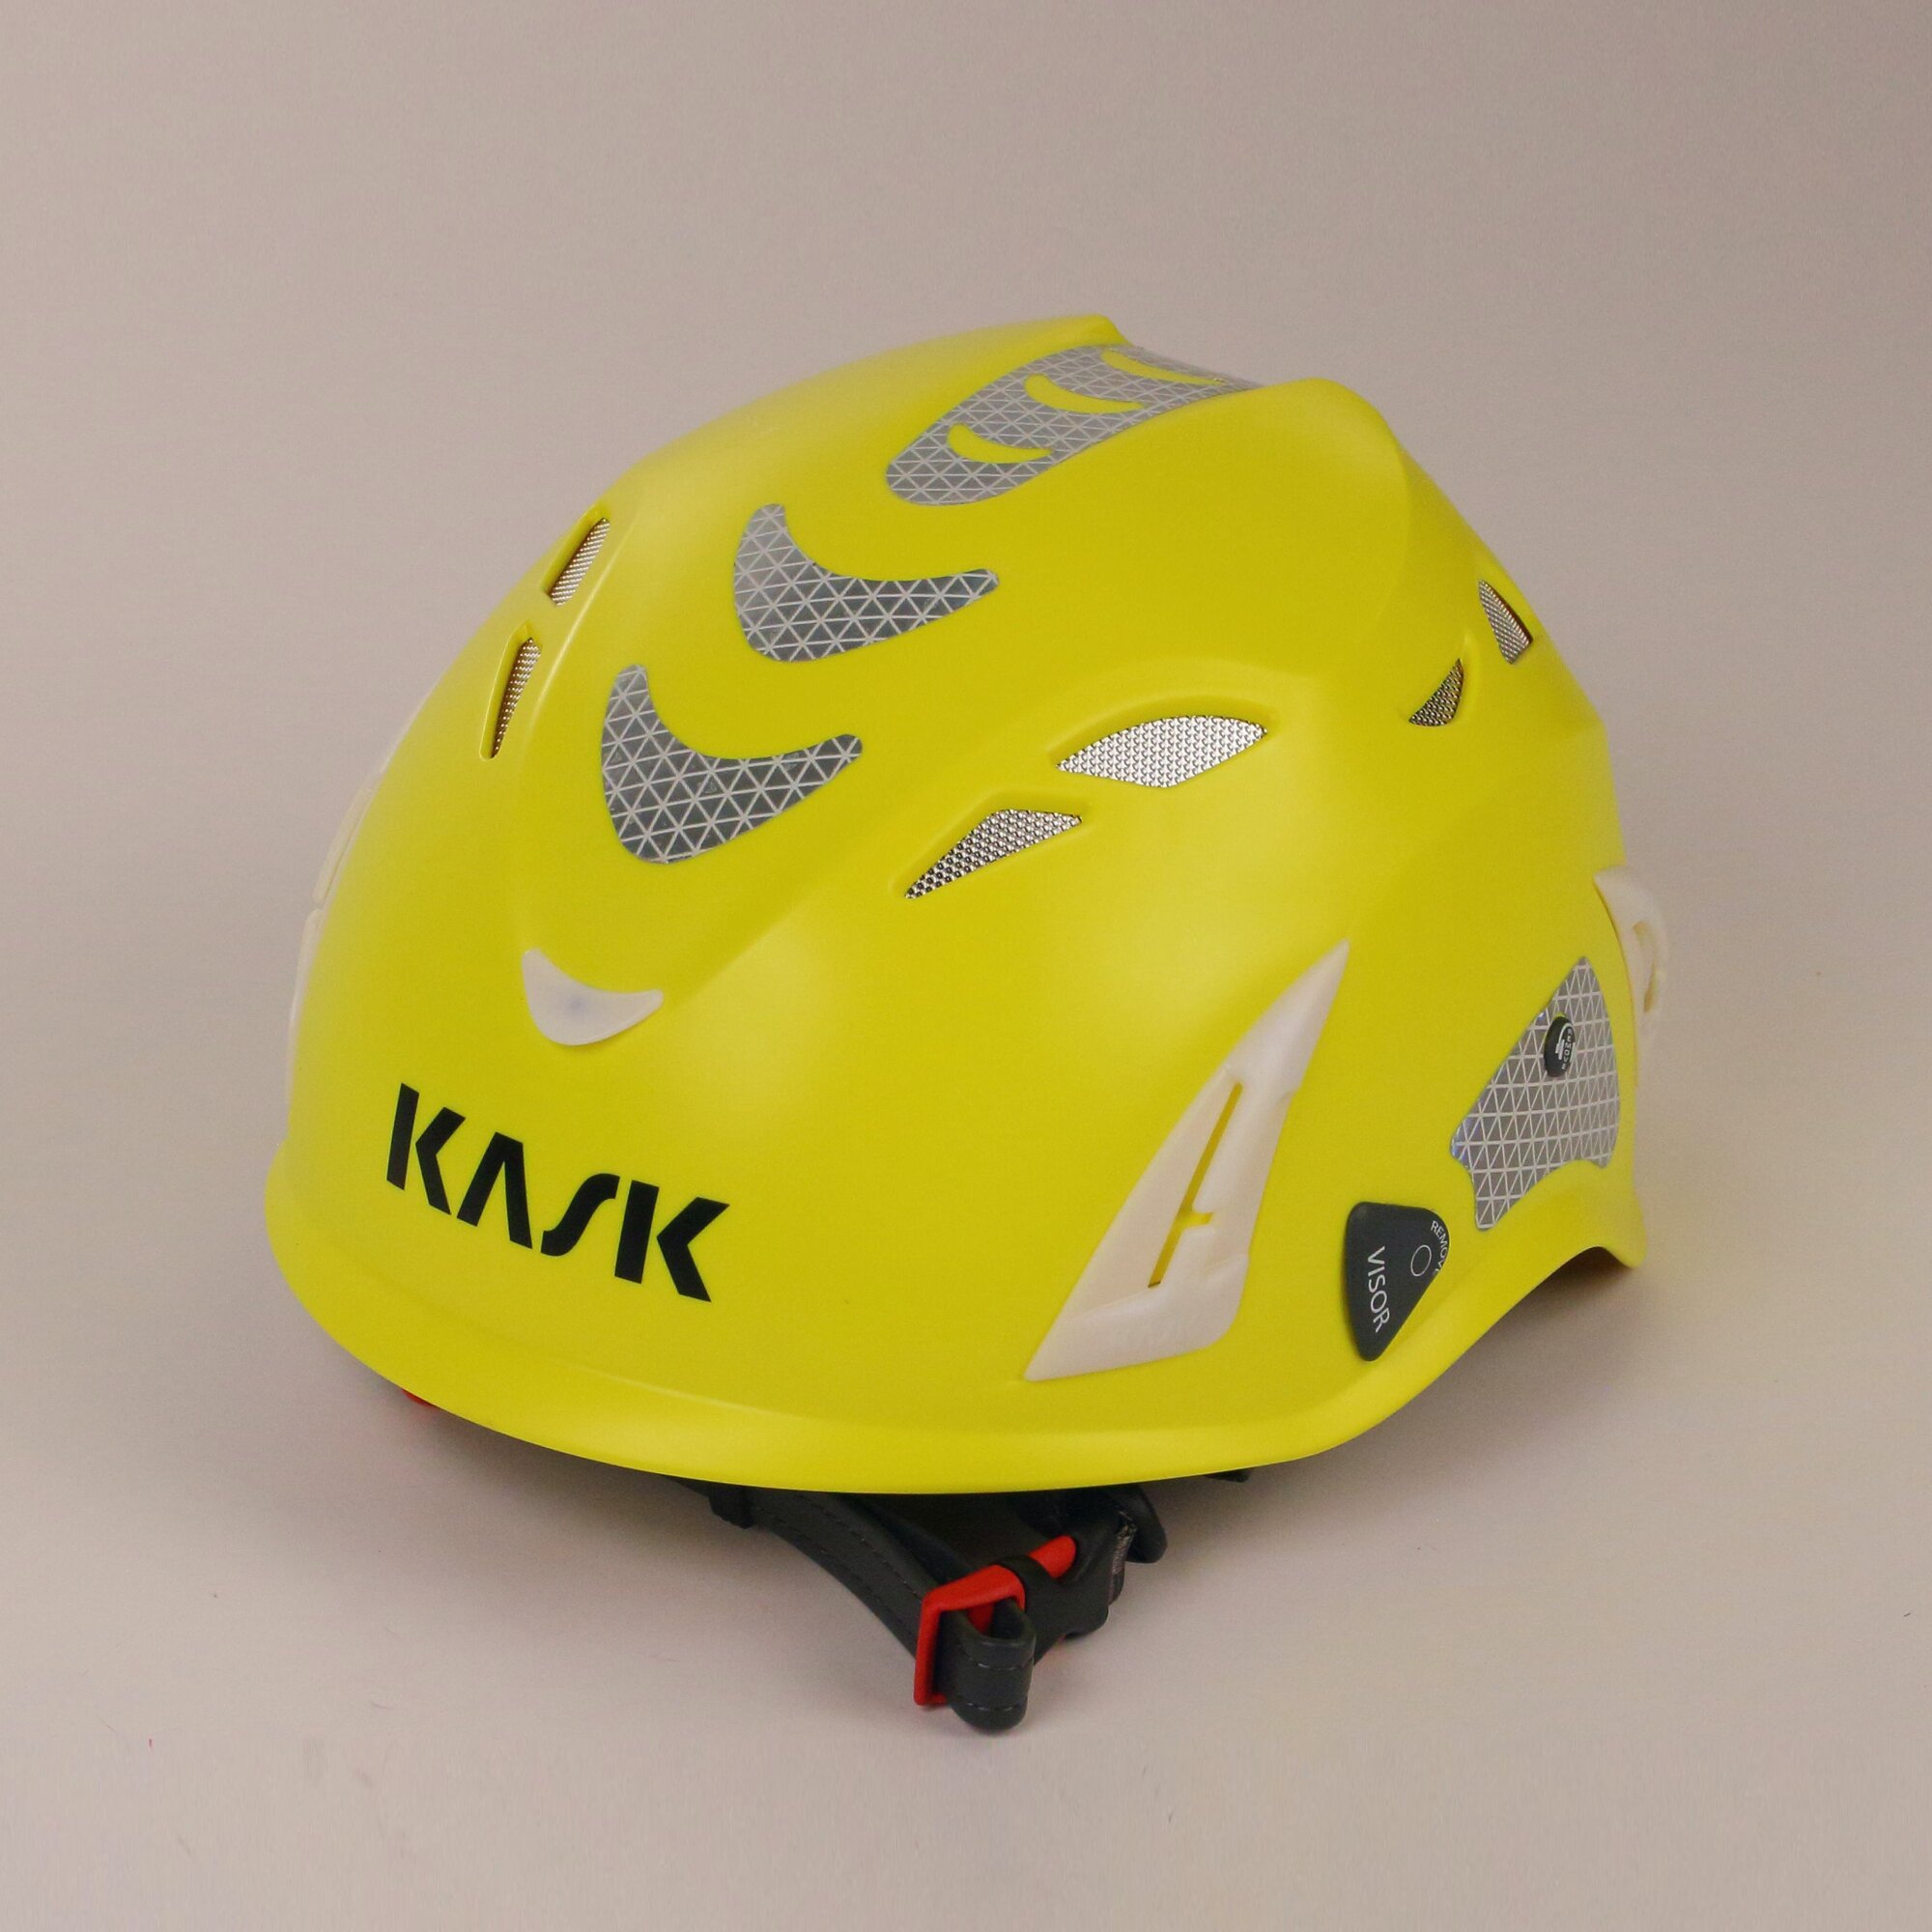 Kask Super Plasma Yellow Helmet 